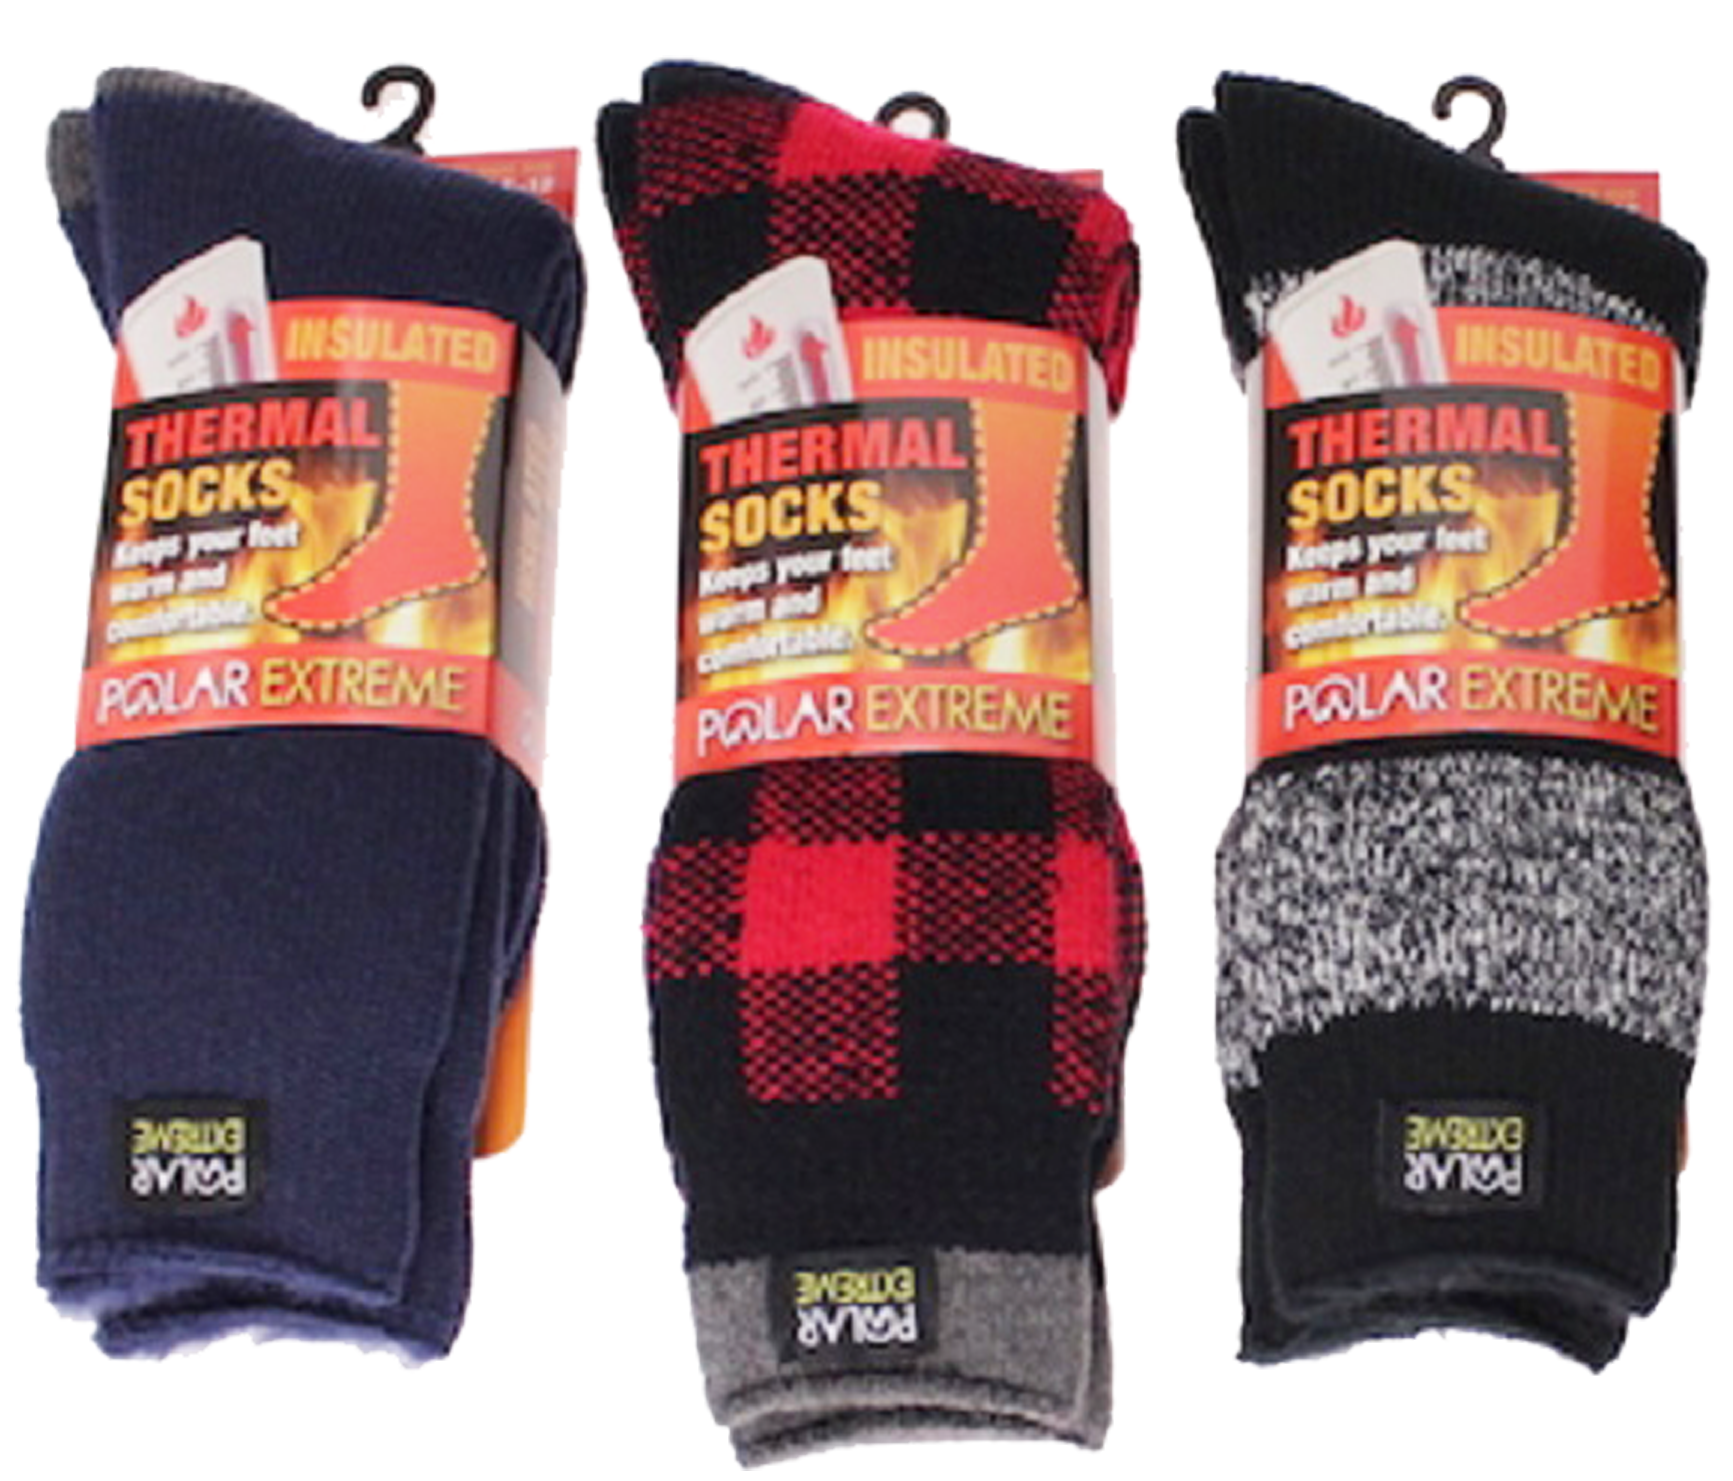 Socks-Men's Polar Extreme Heat Sock, Assorted Patterns/Colors